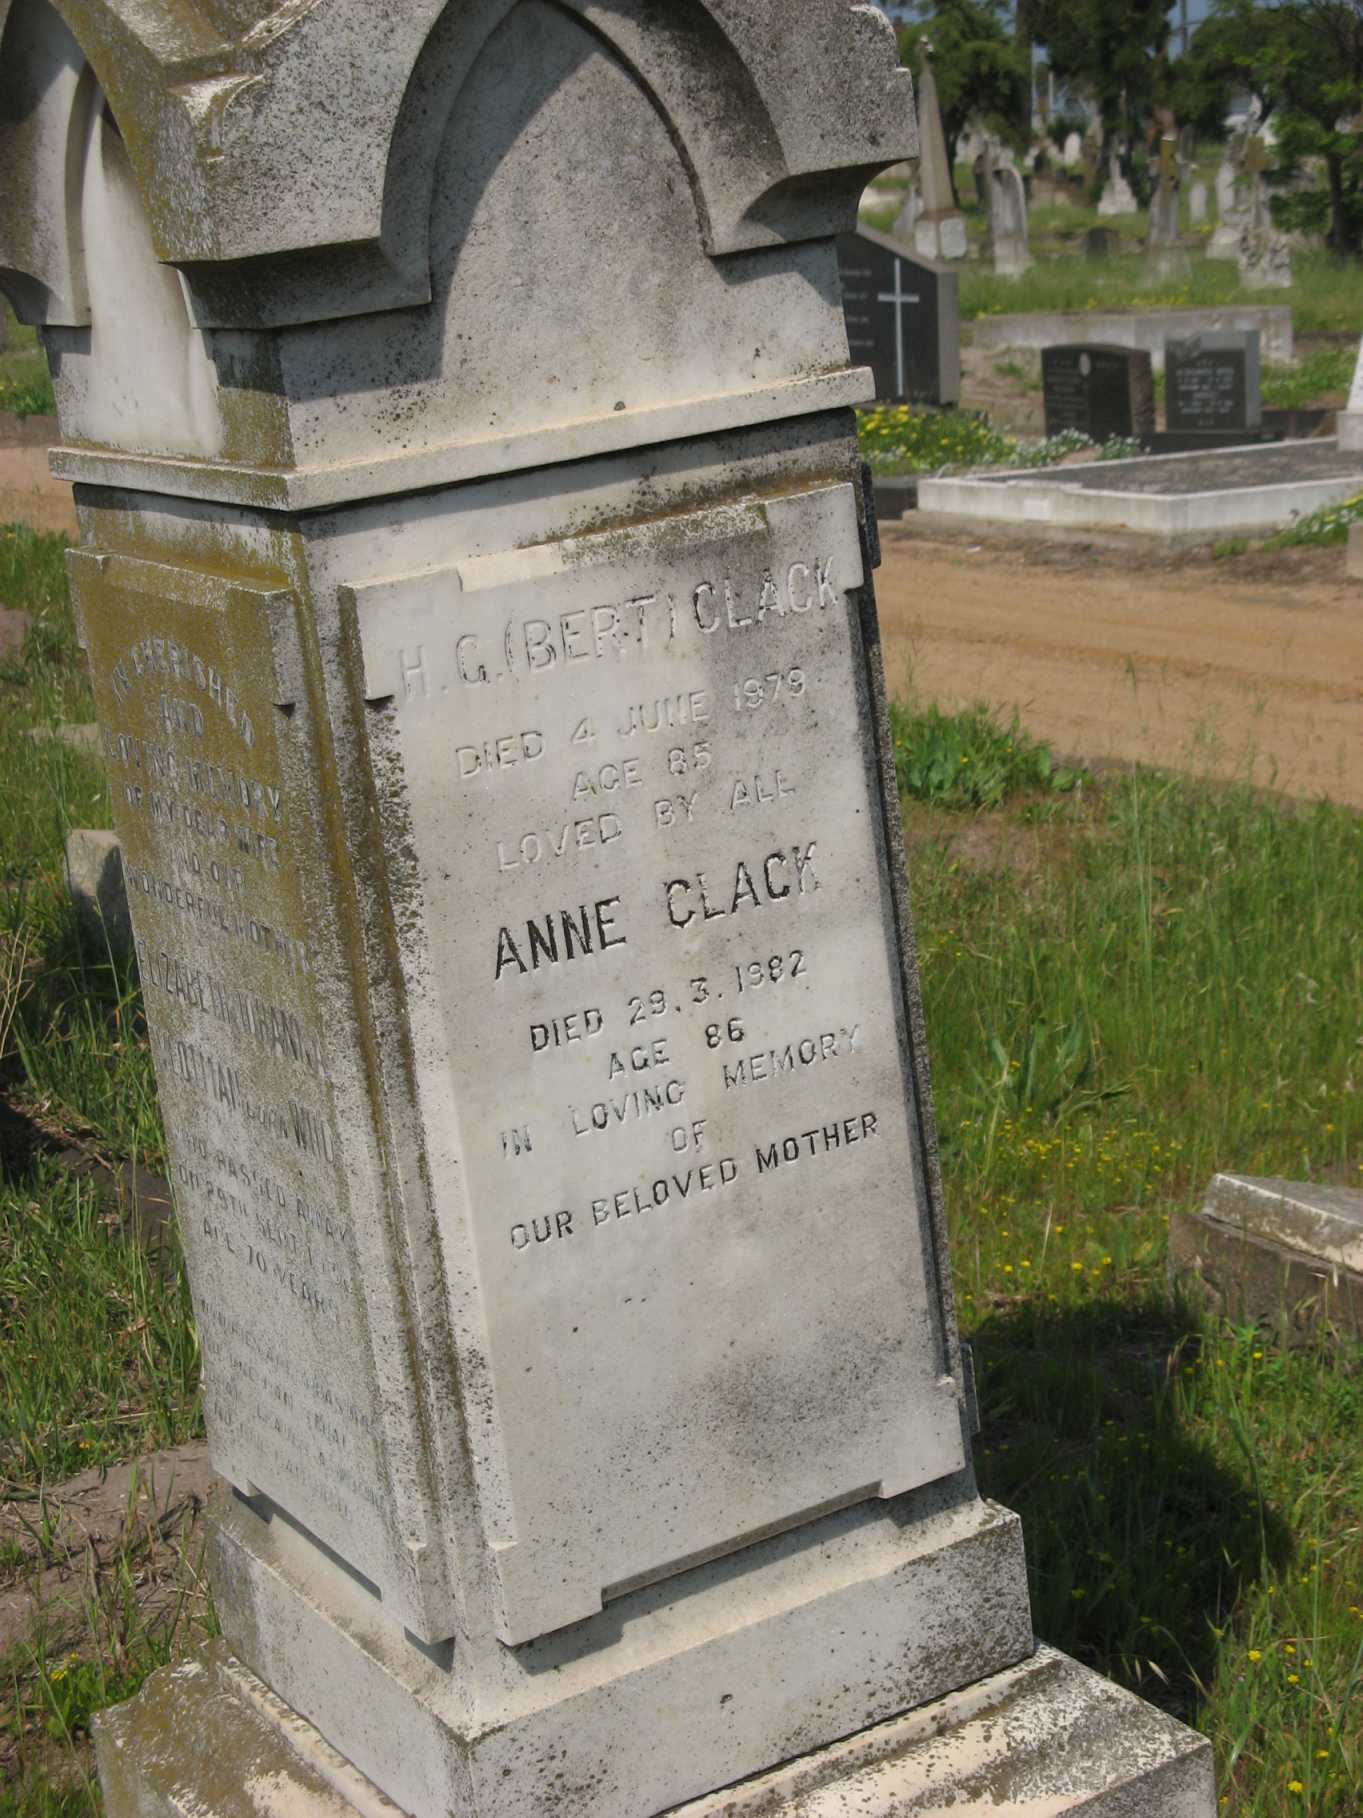 CLACK H.G. -1979 & Anne -1982